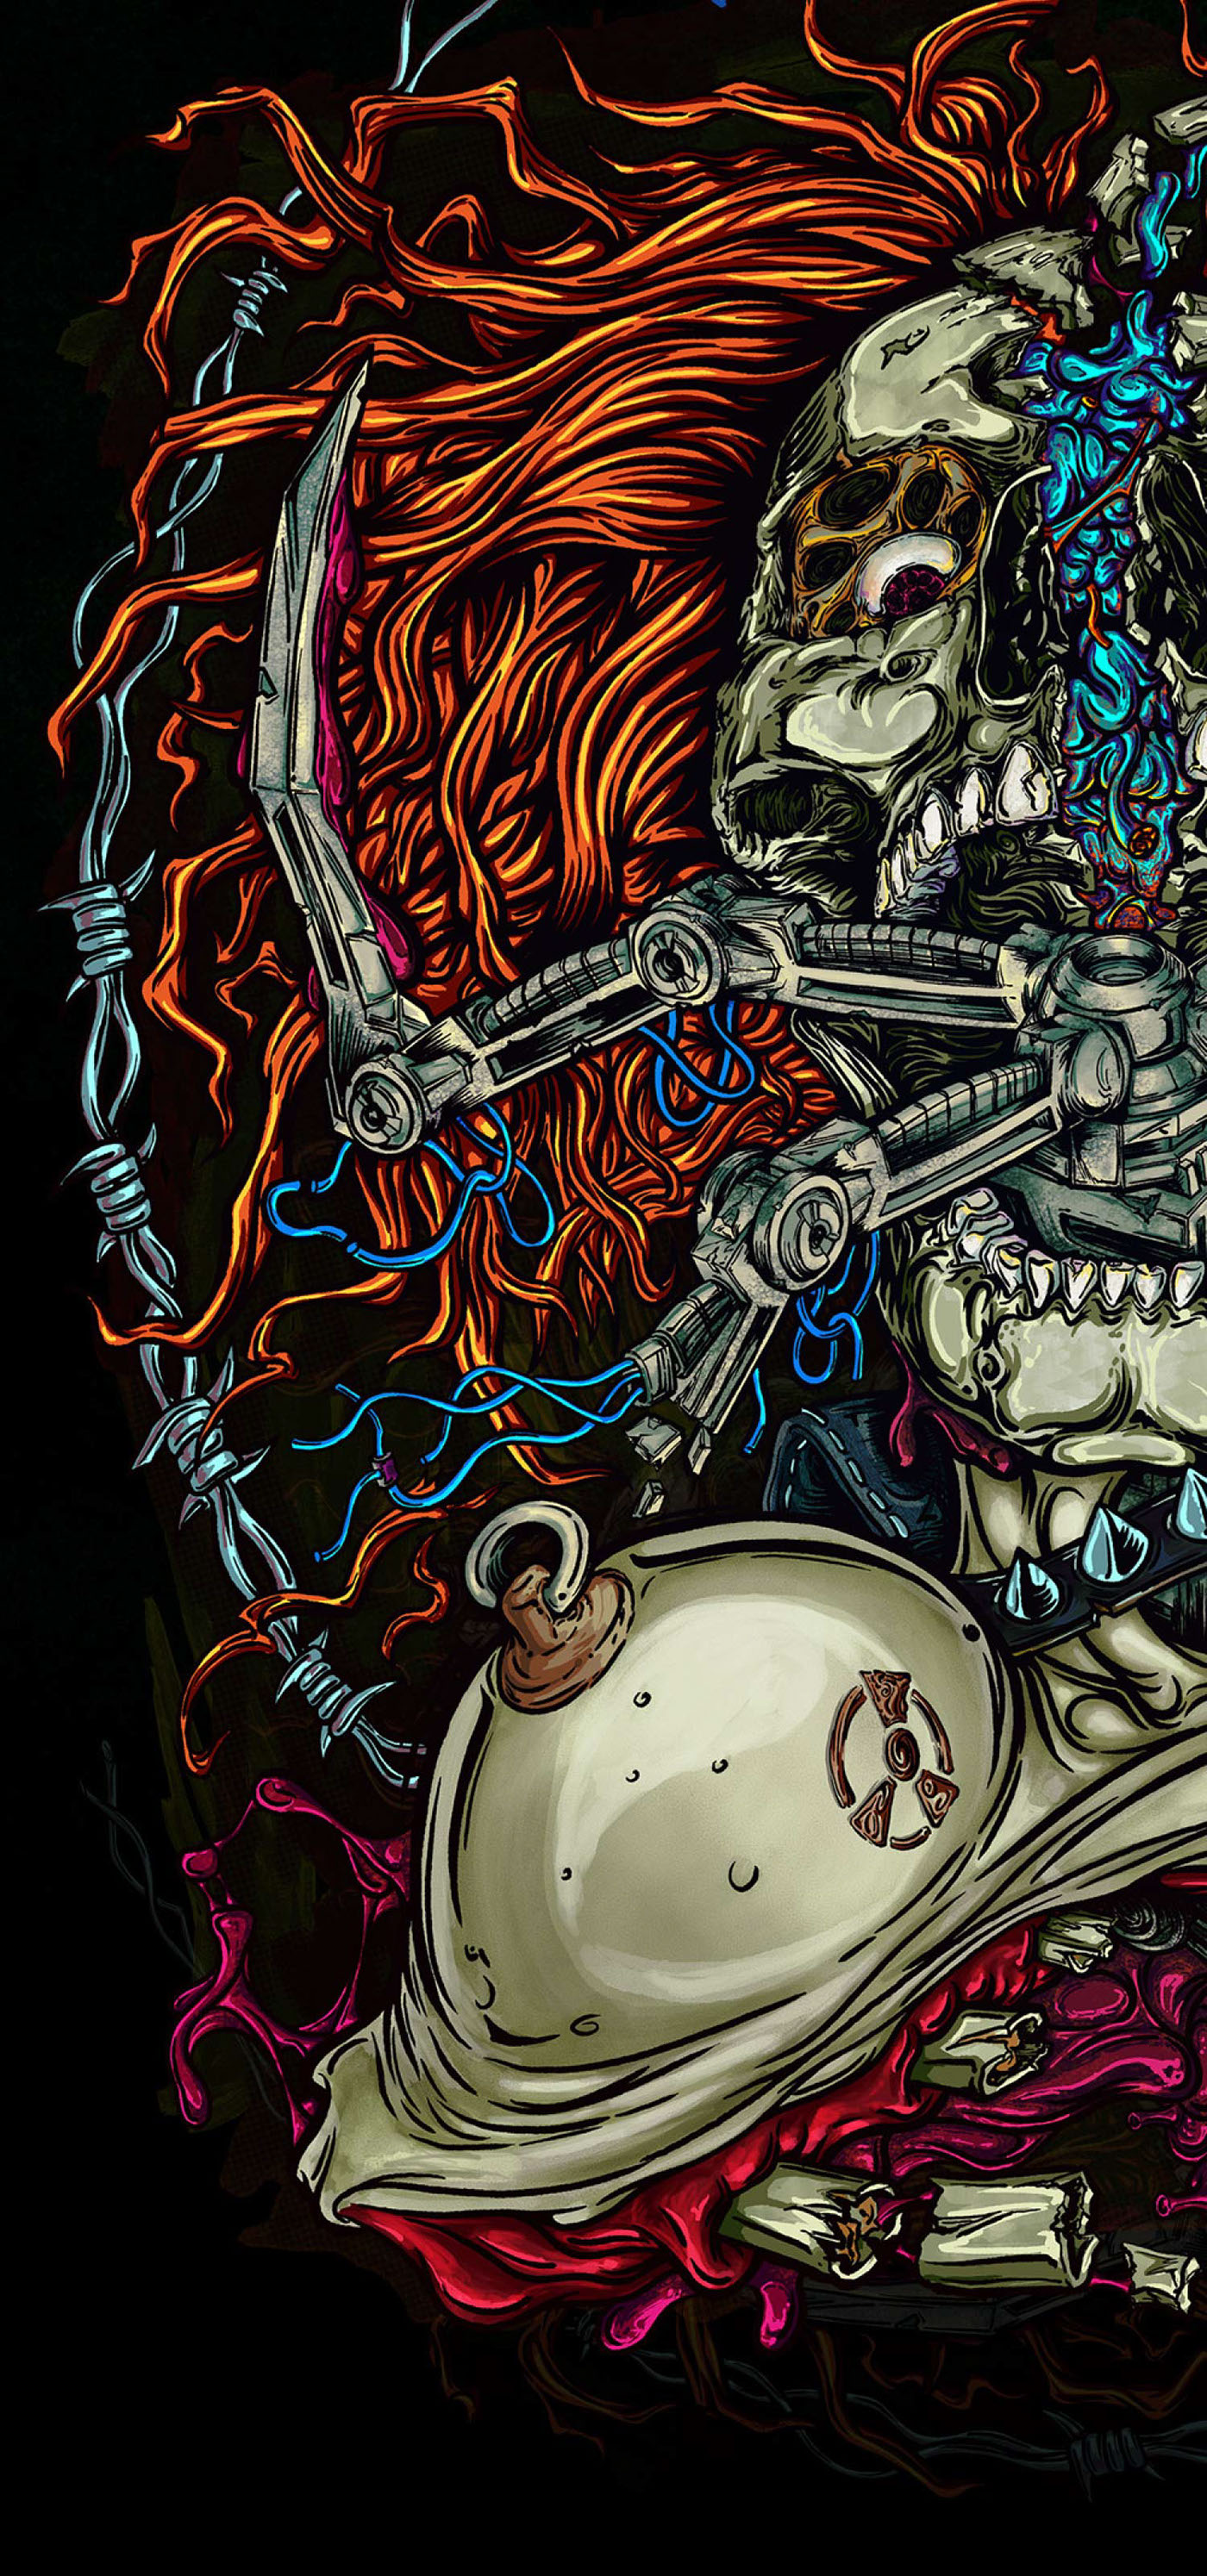 Bogothrash thrash metal fest festival skull bones robot barbed wire hybrid